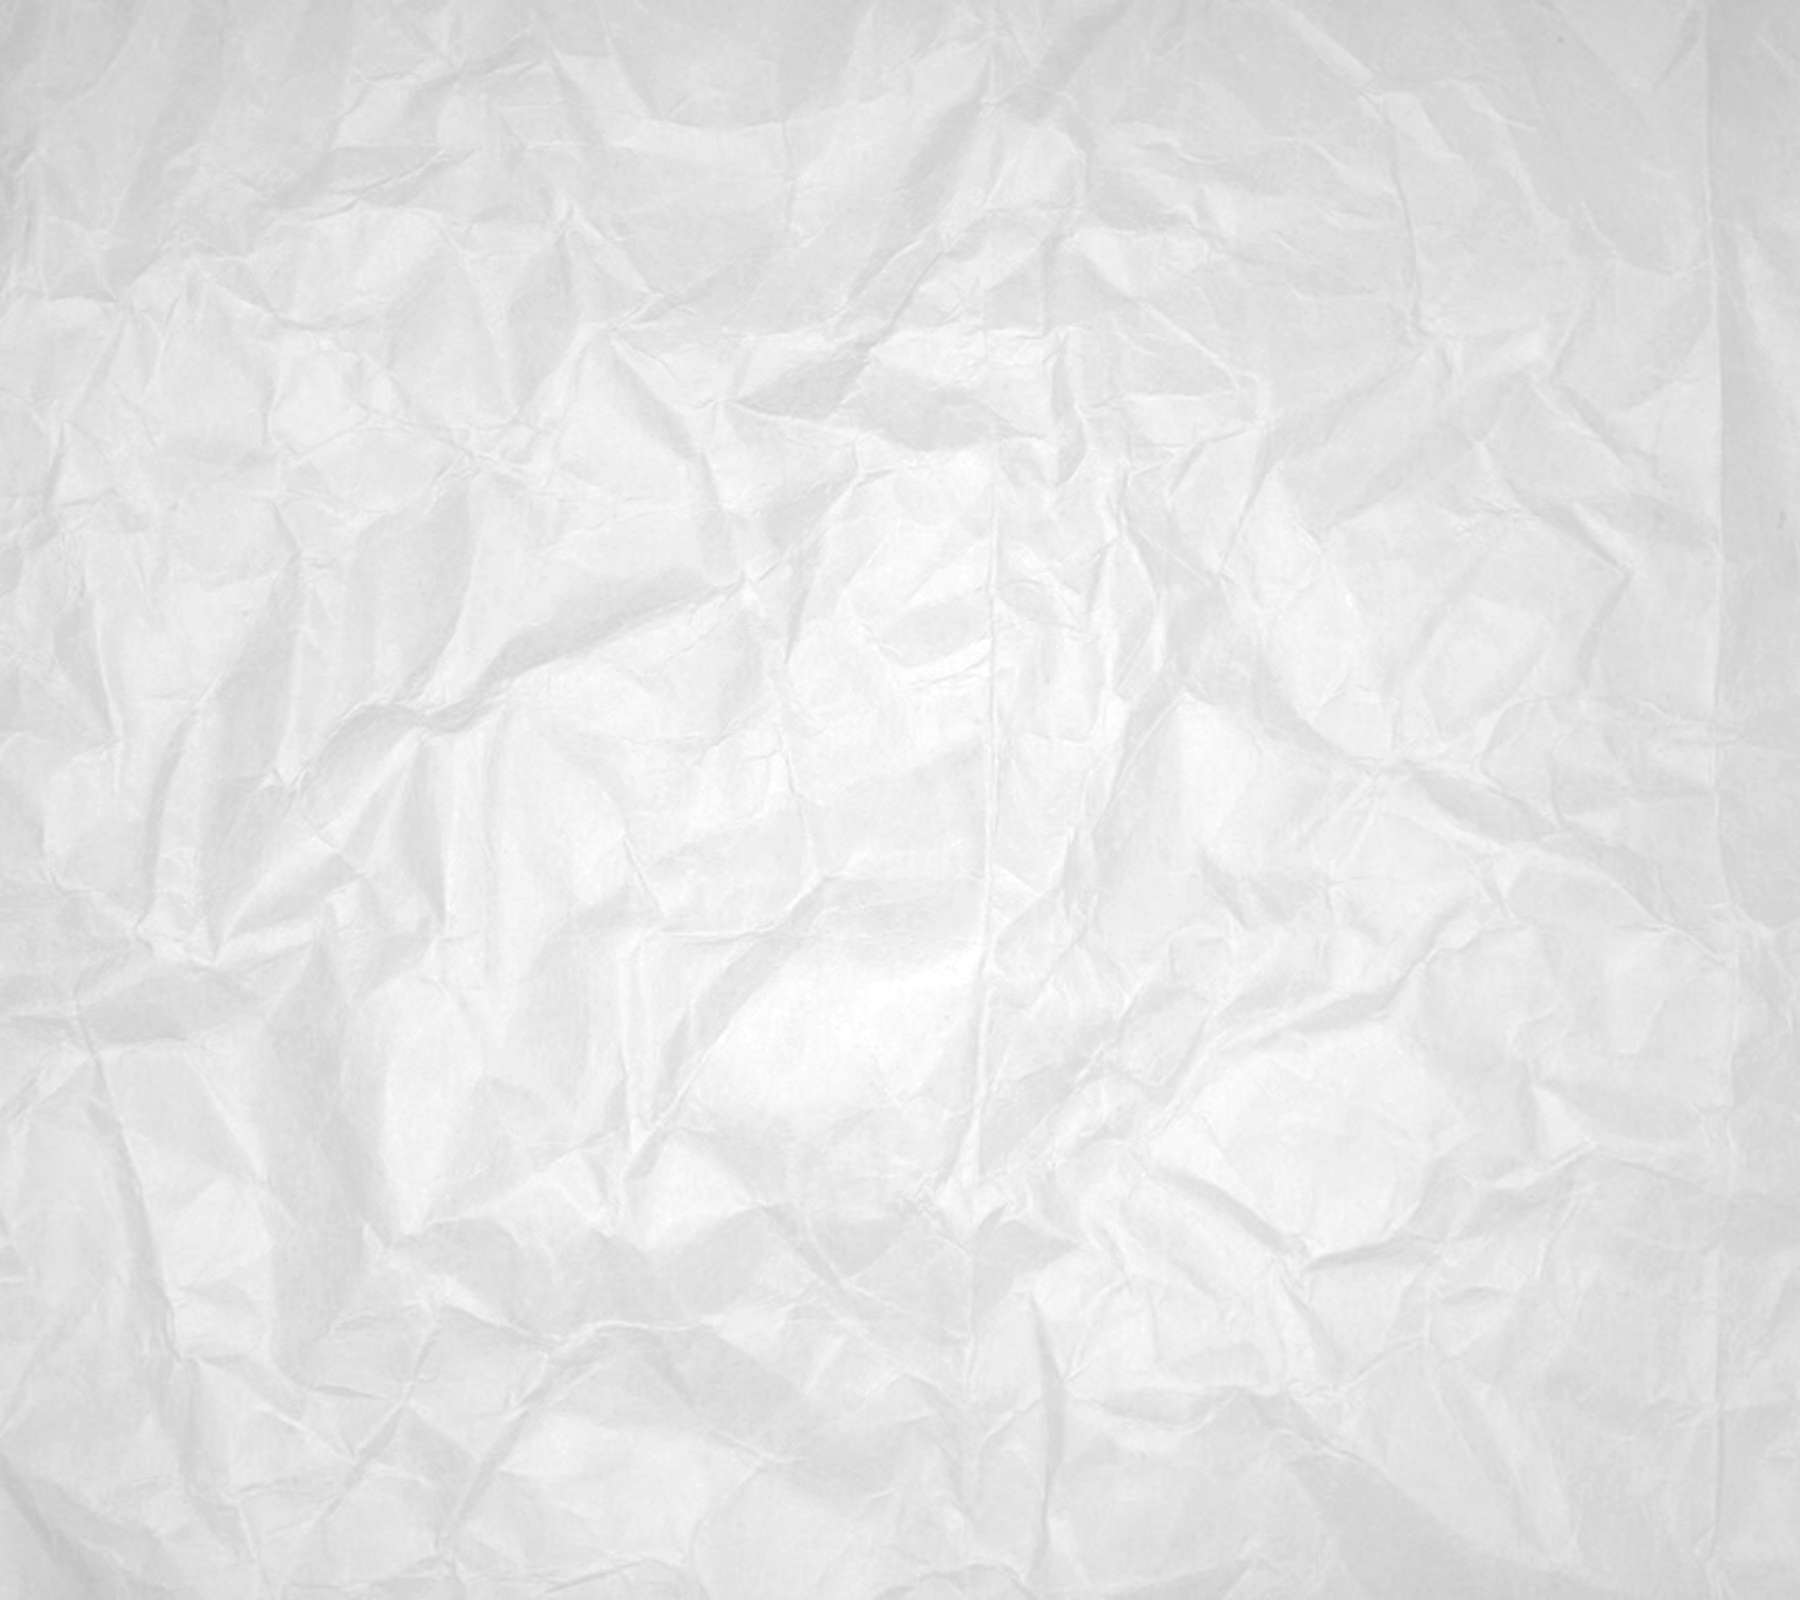 Wrinkled White Paper Background Image Wallpaper